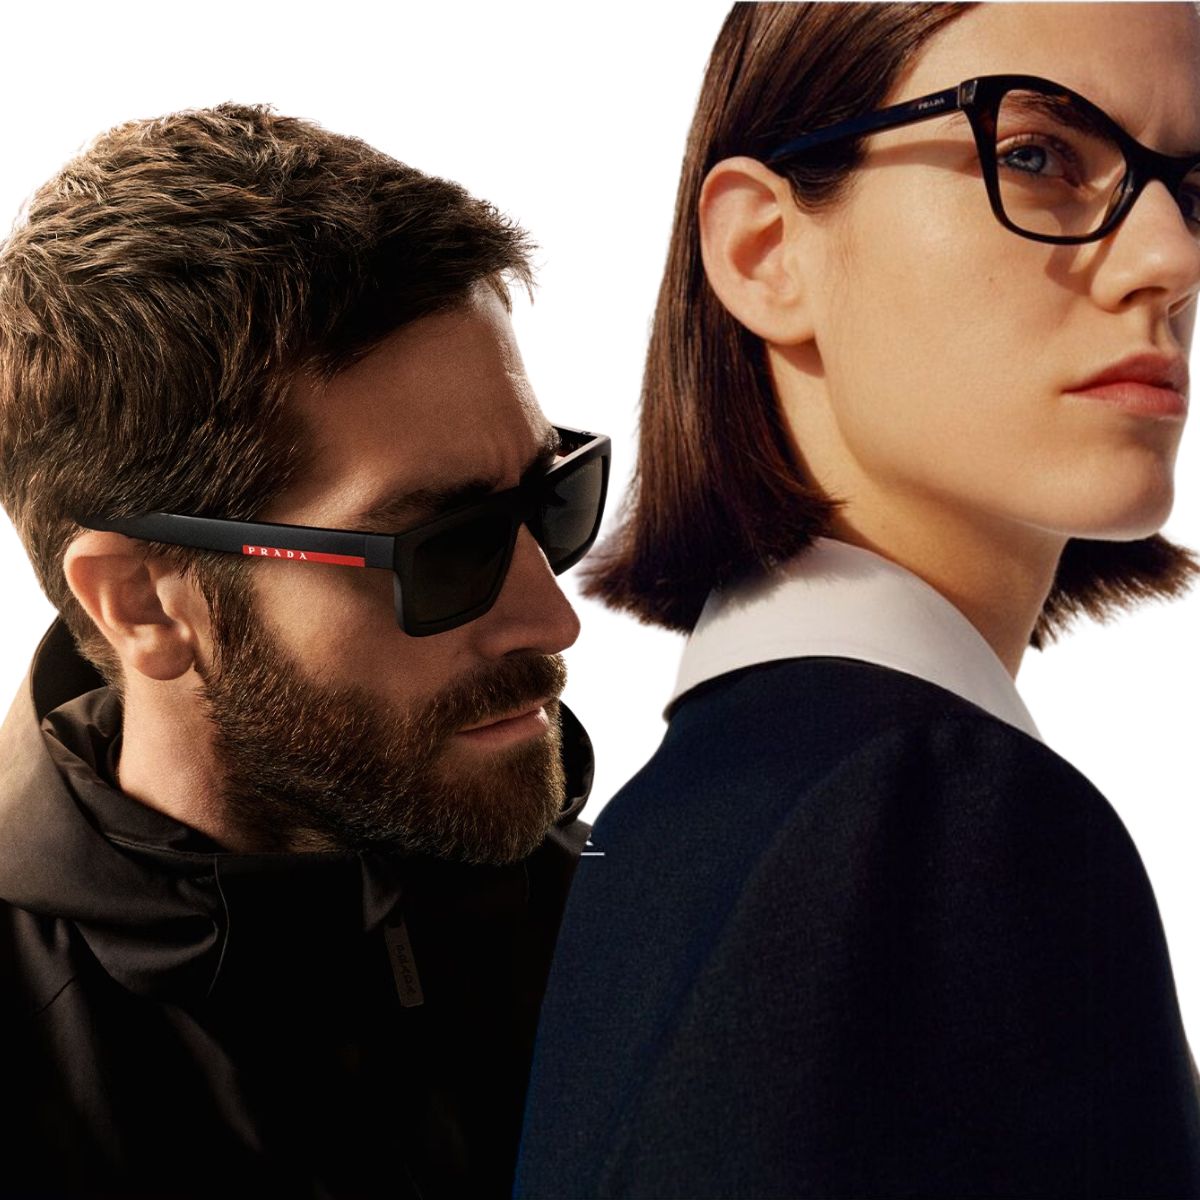 "Prada Eyewear Frame's & Sunglasses For Both Men's & Women's Available At Optorium"